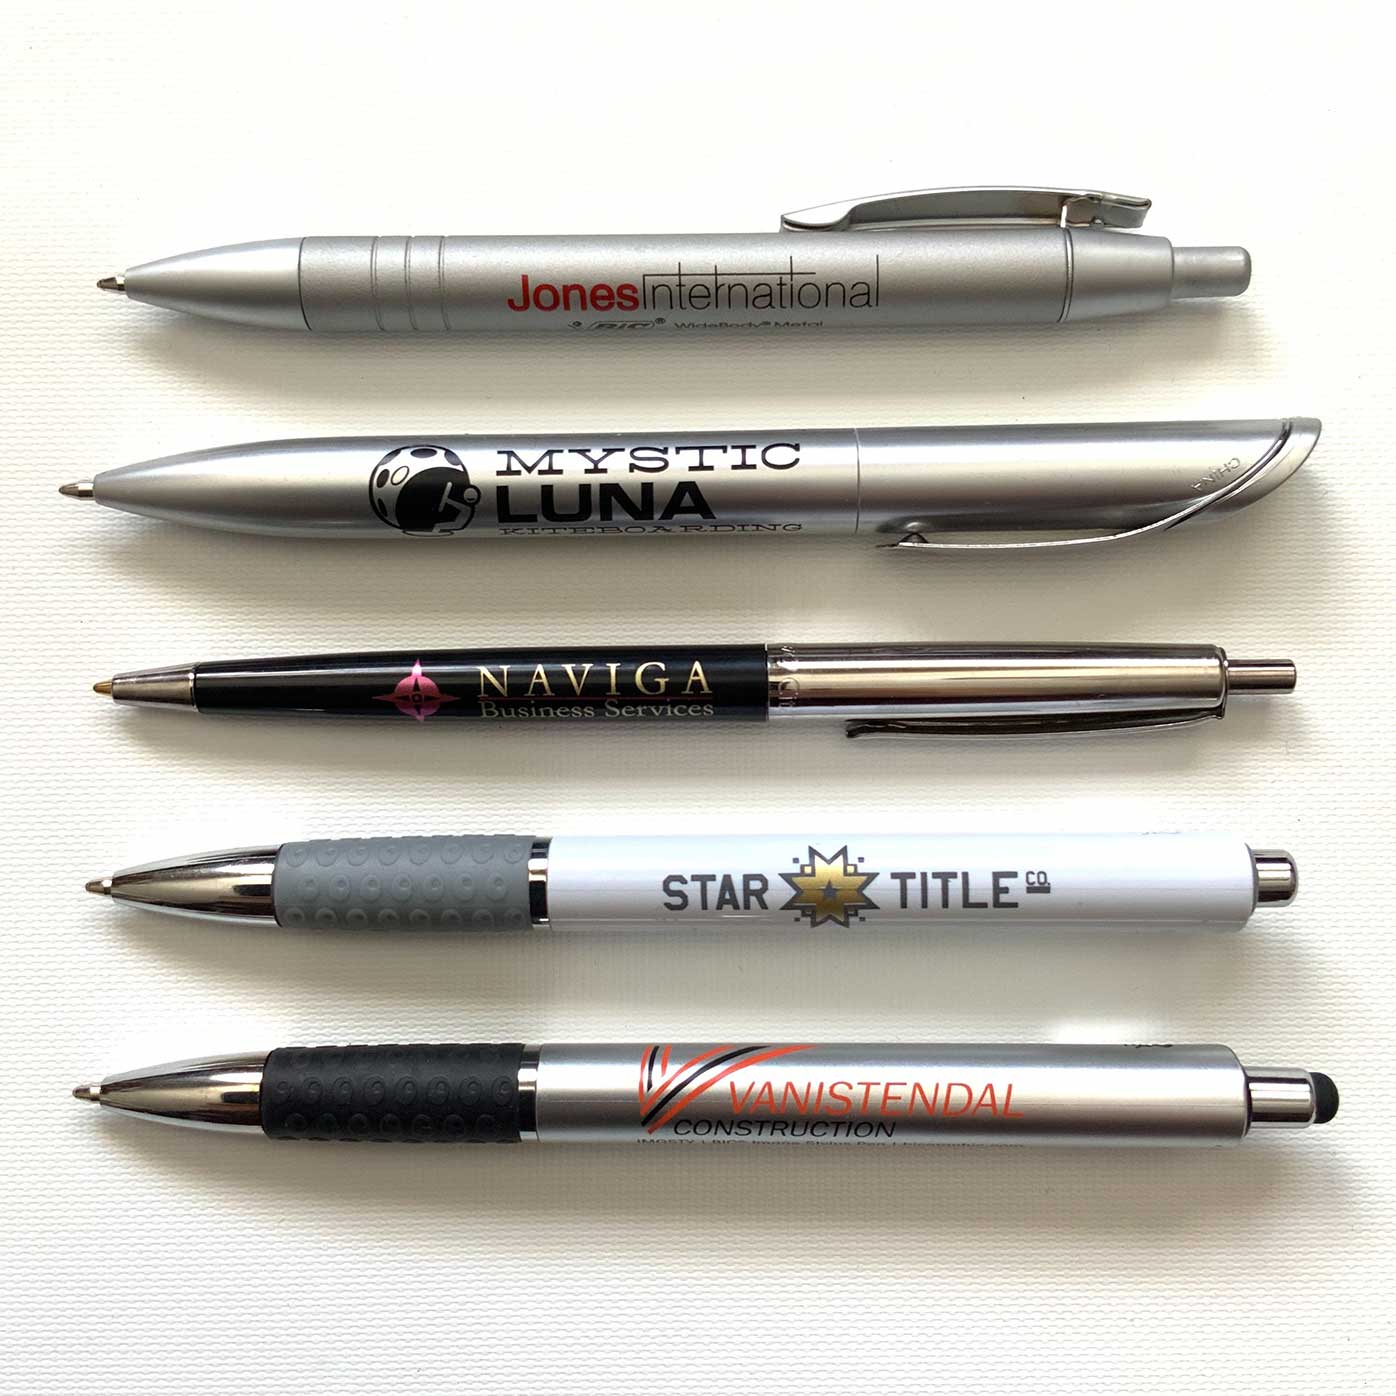 Customized pens